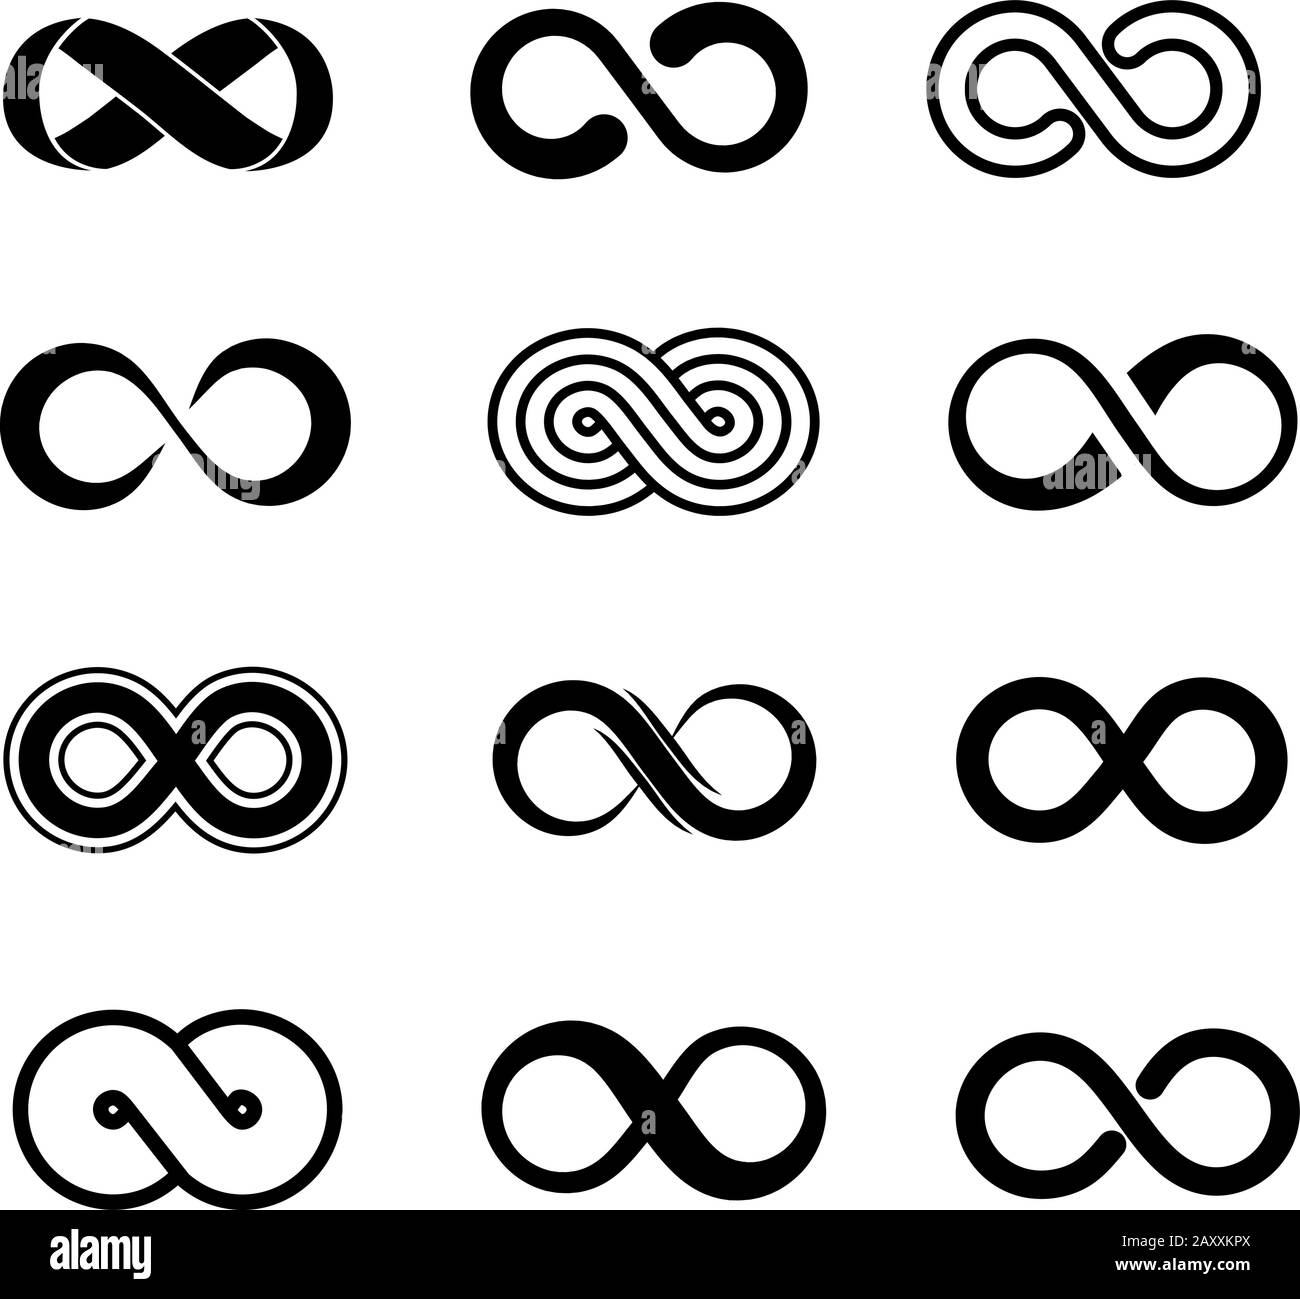 Infinity symbol vector set. Infinity sign, endless infinity, loop infinity illustration Stock Vector